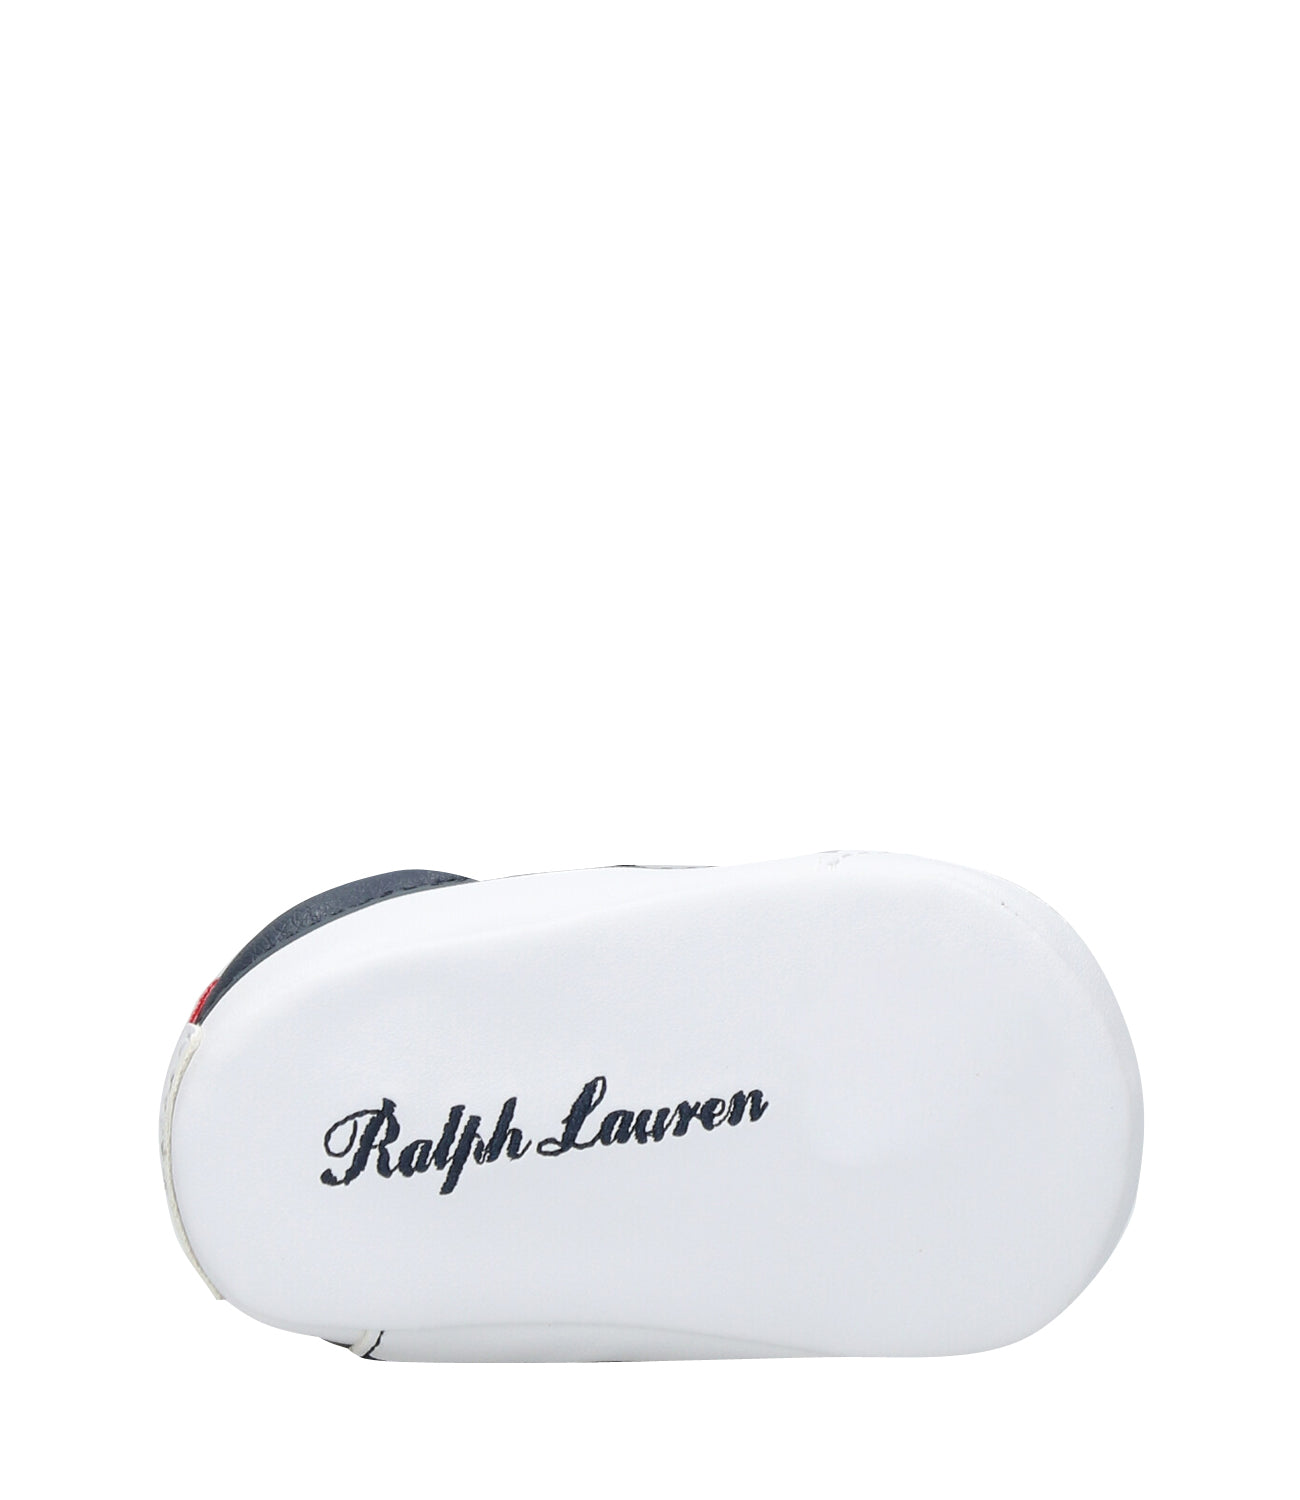 Ralph Lauren Childrenswear | Sneakers Blu Navy e Rosso